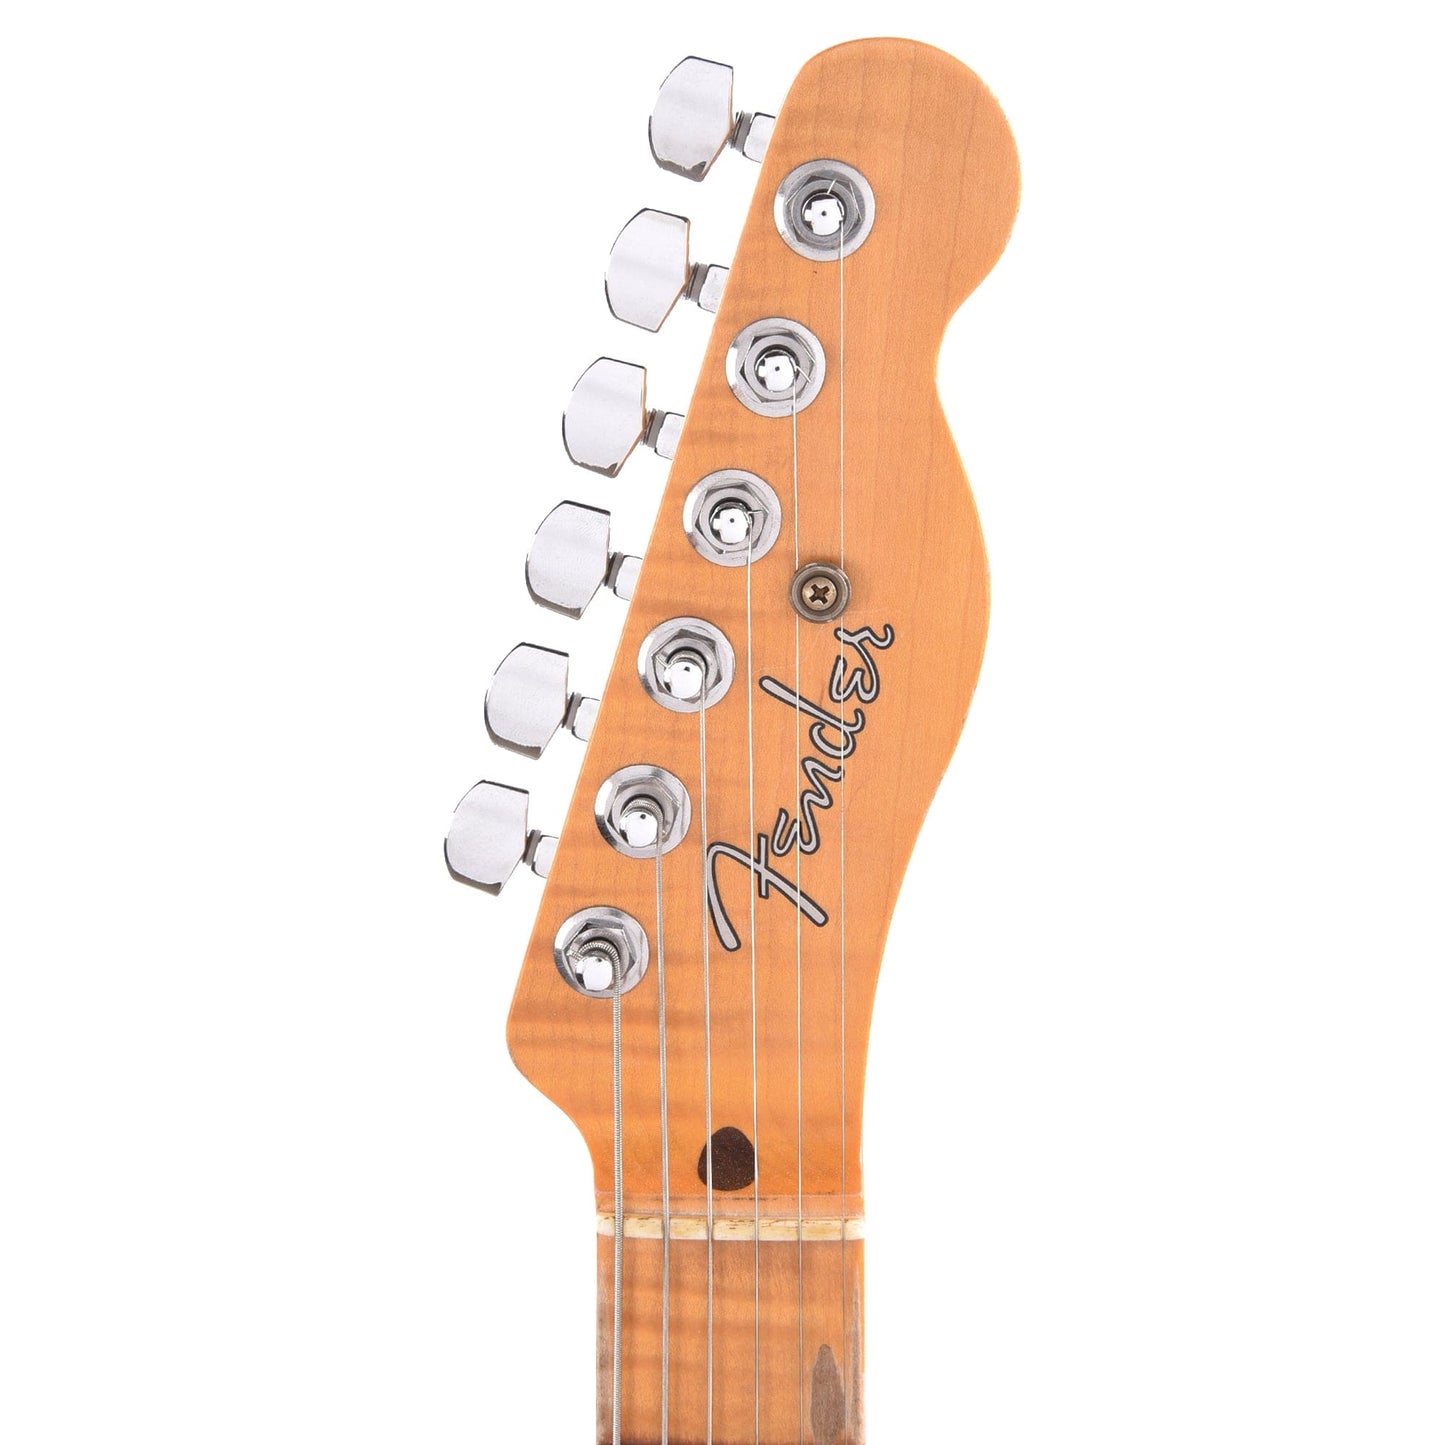 Fender Custom Shop Limited Edition Caballo Tono Ligero Relic Aged Magenta Sparkle Electric Guitars / Solid Body